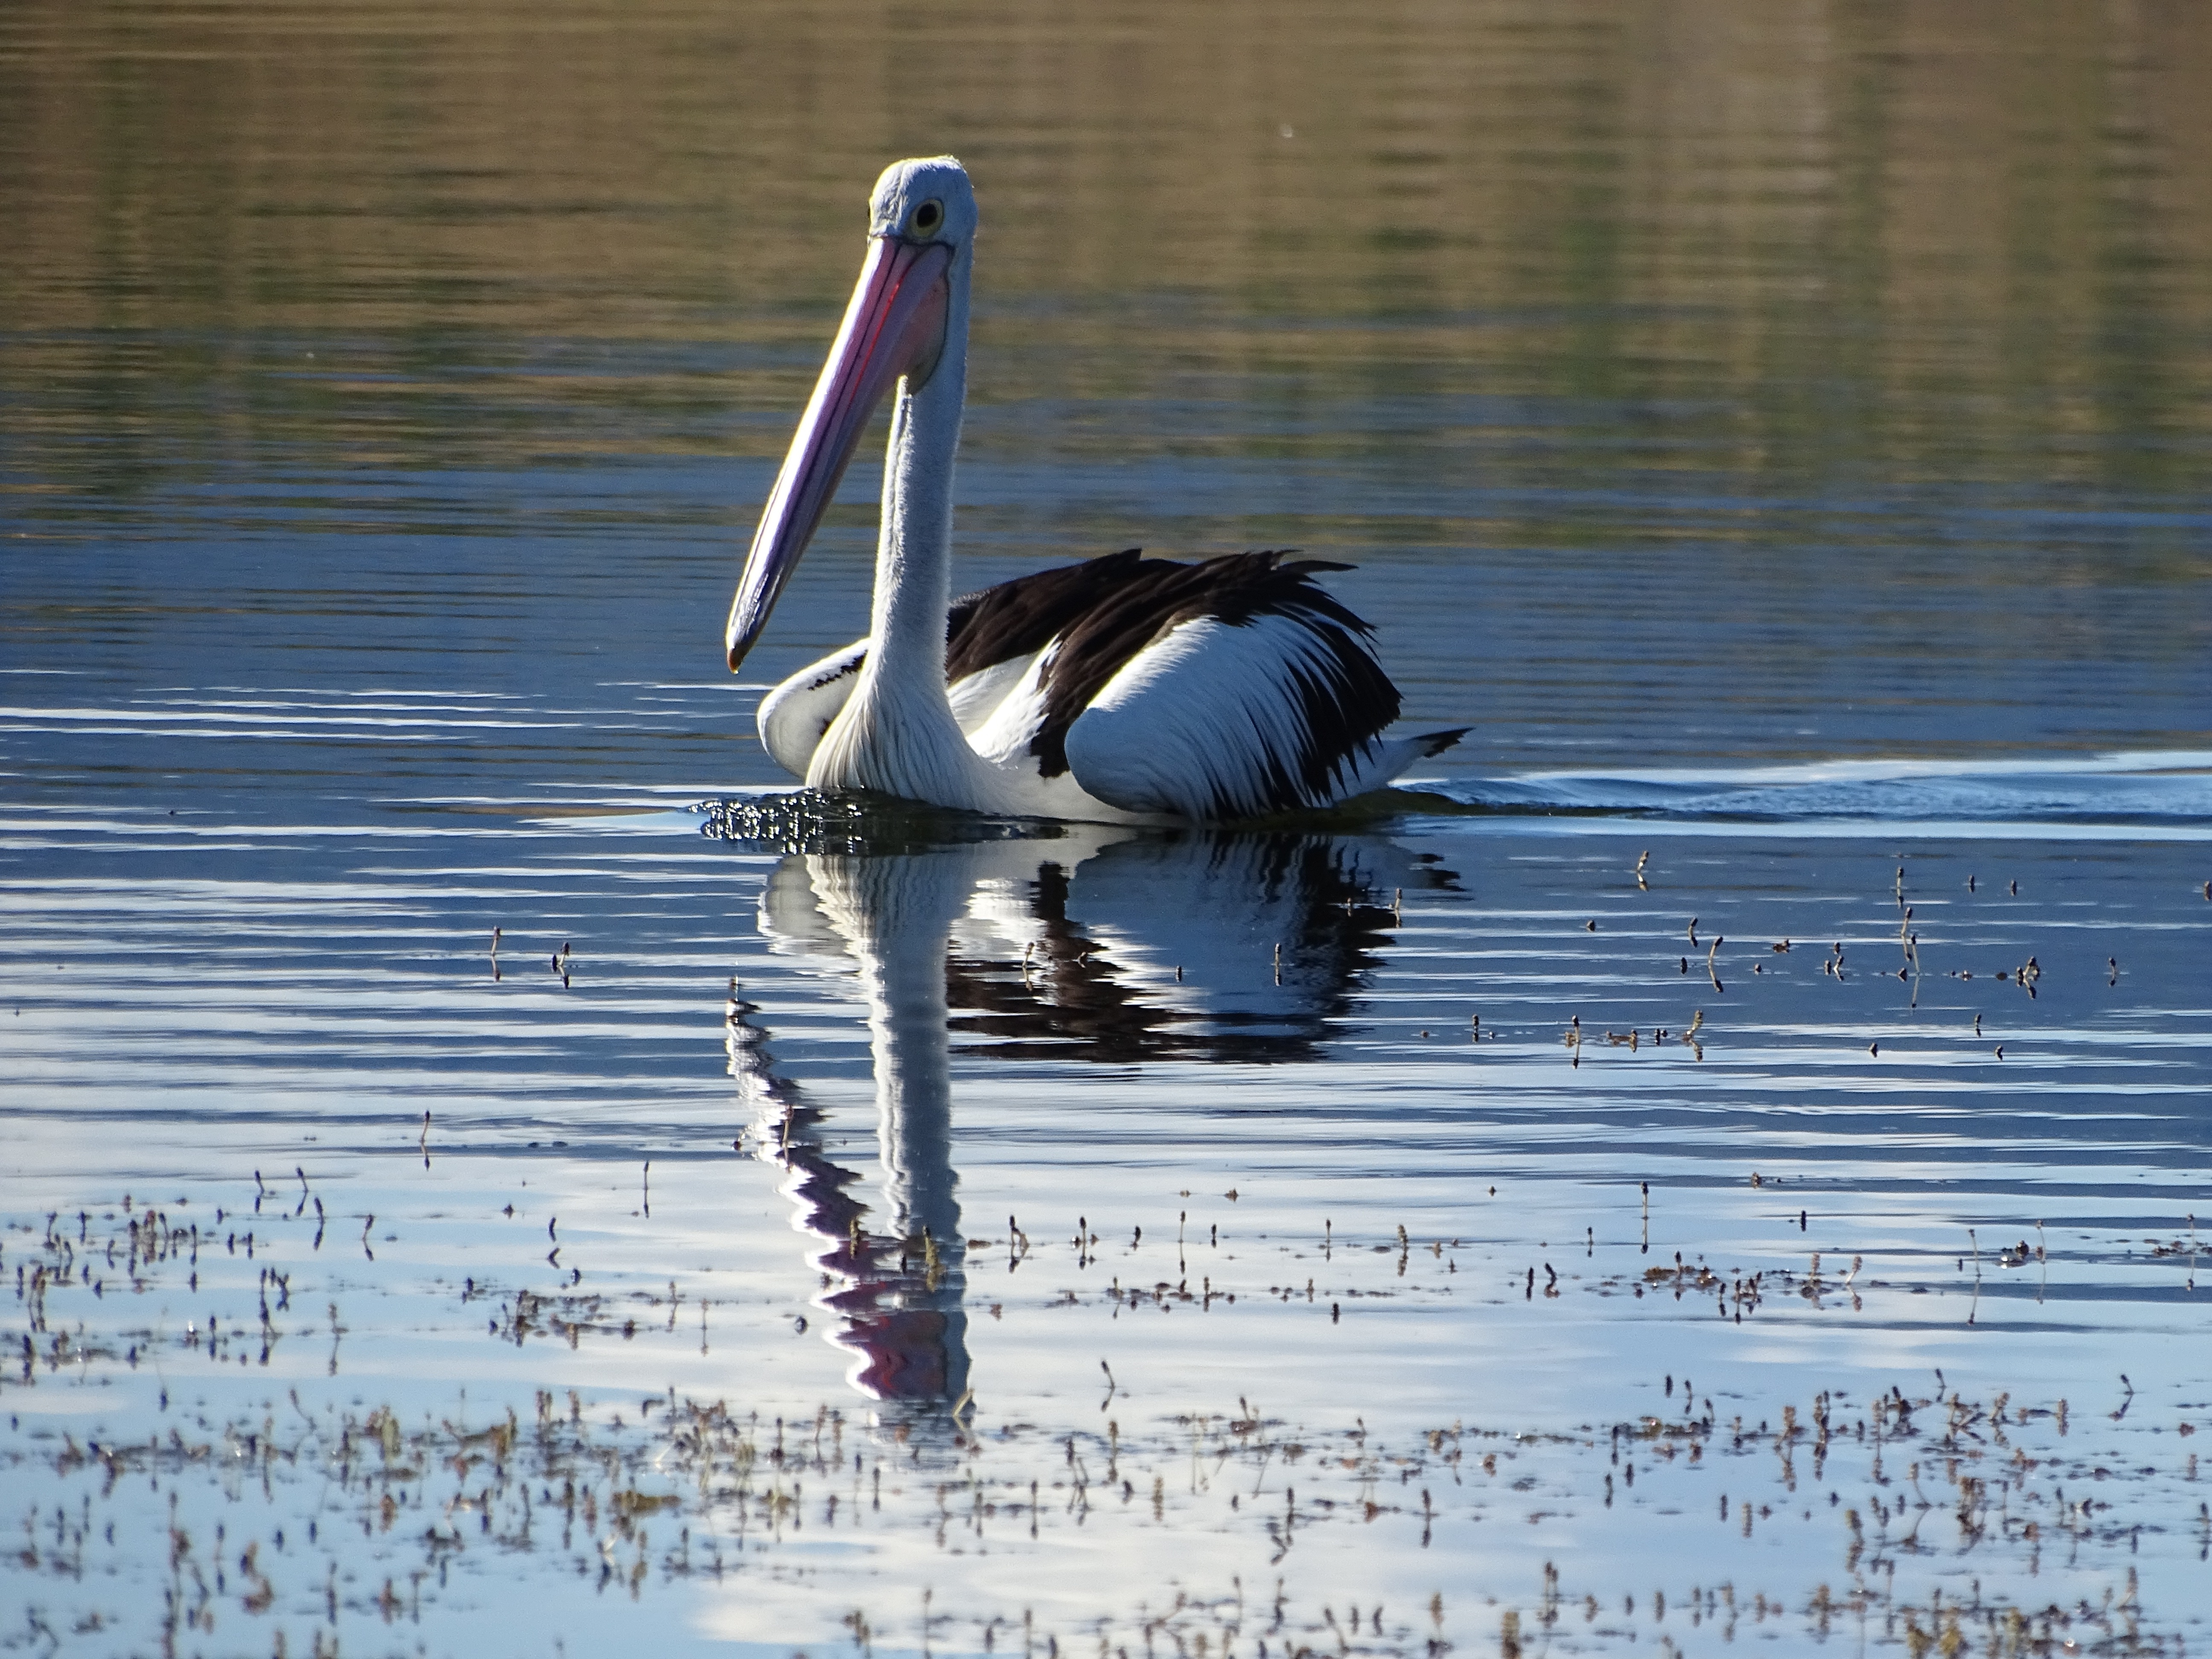 australian pelican